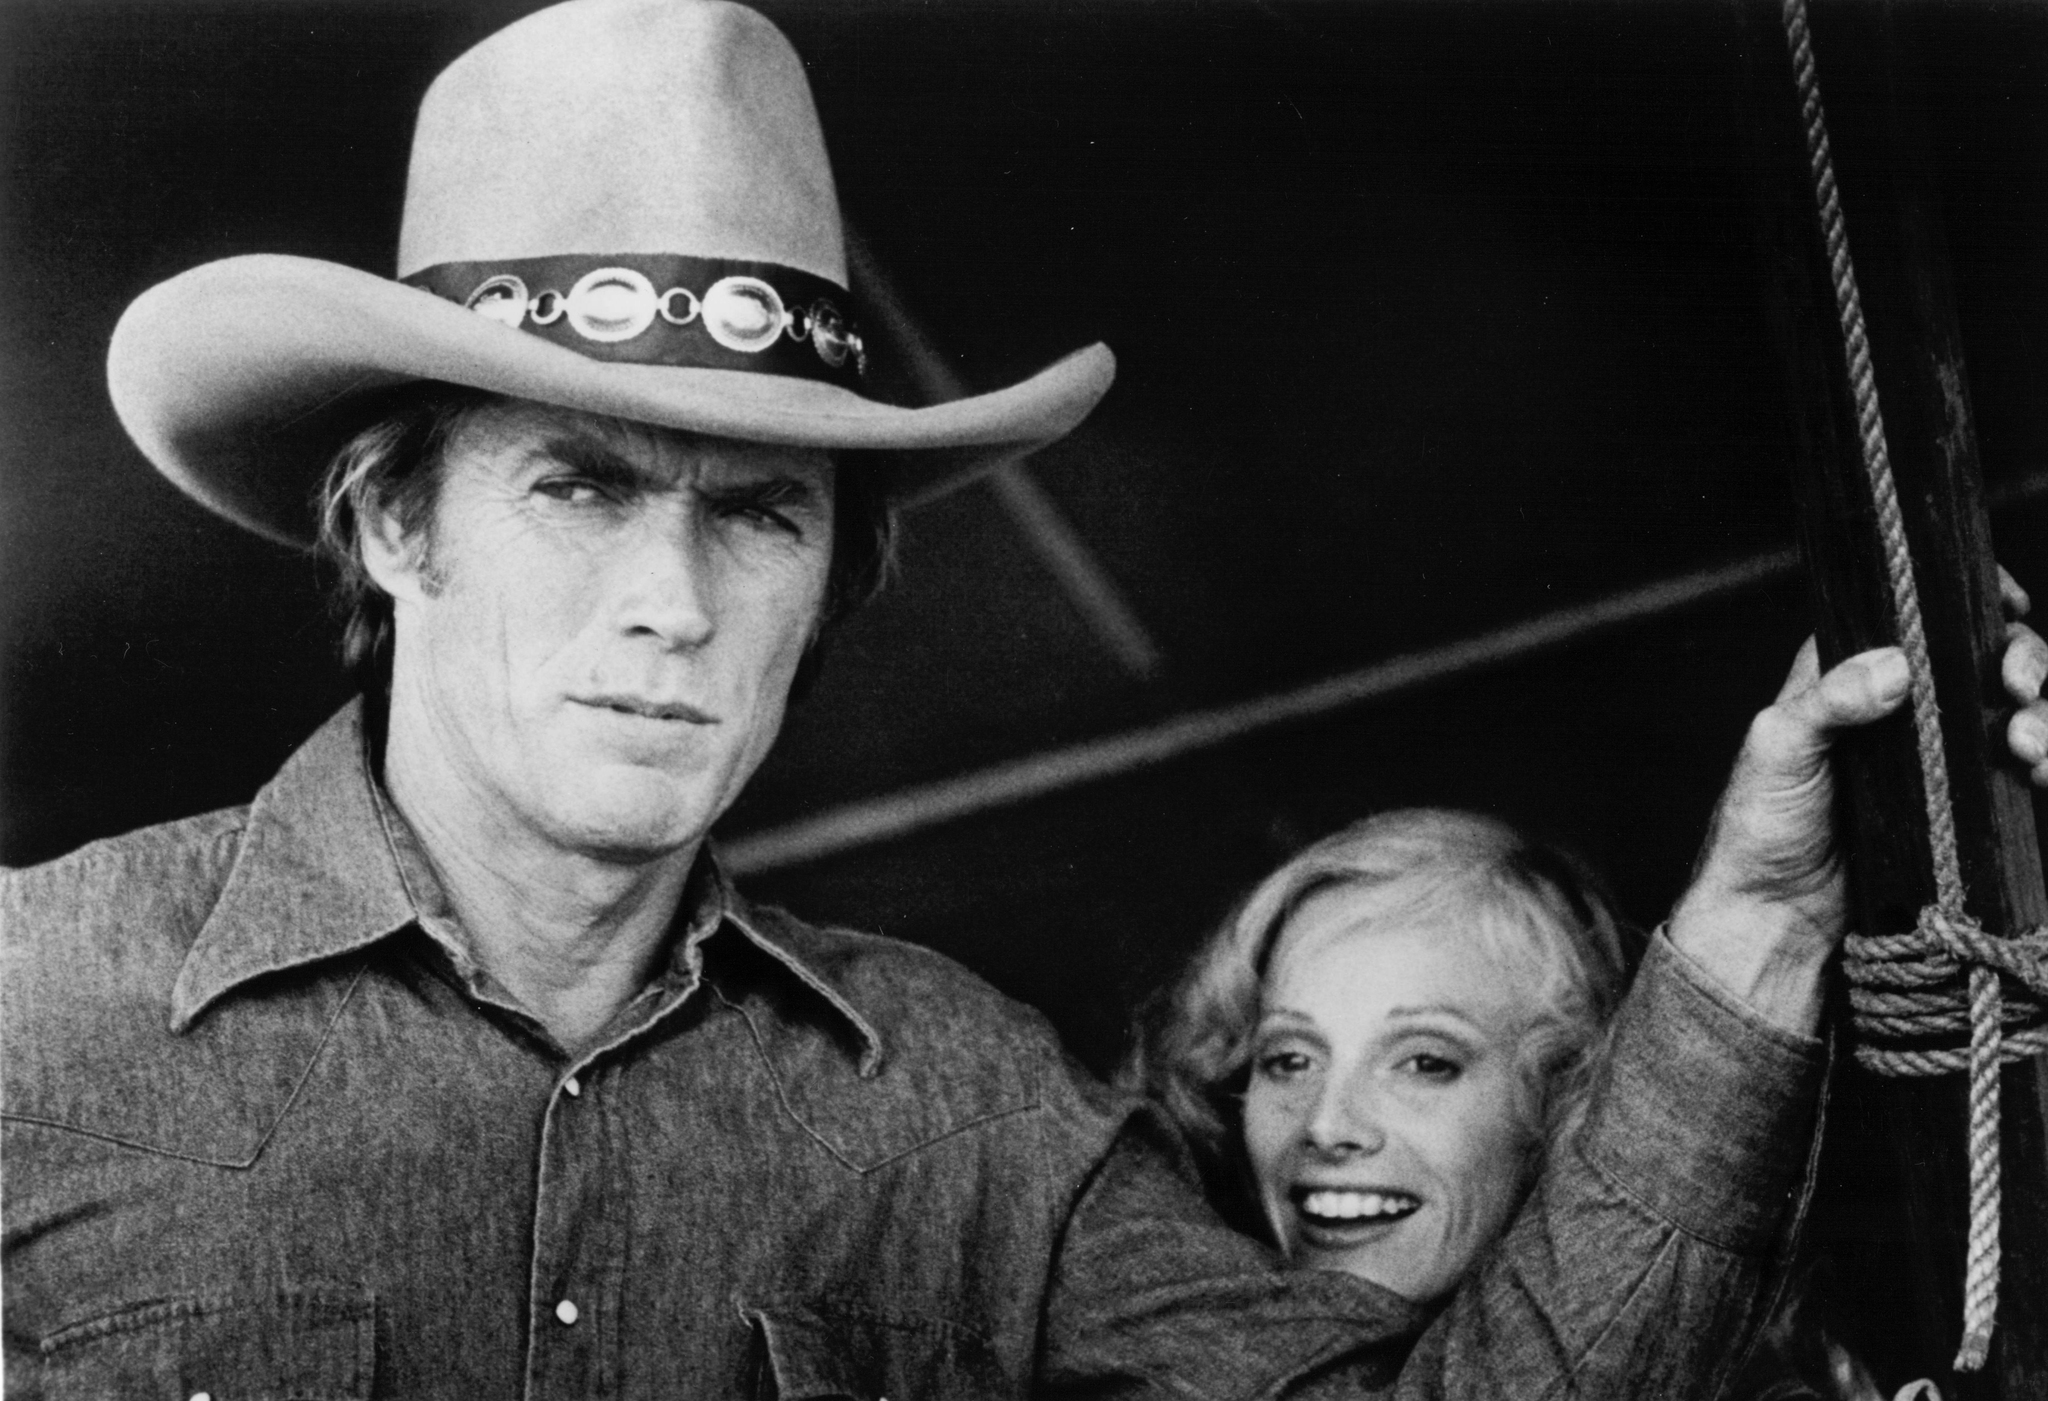 Still of Clint Eastwood and Sondra Locke in Bronco Billy (1980)